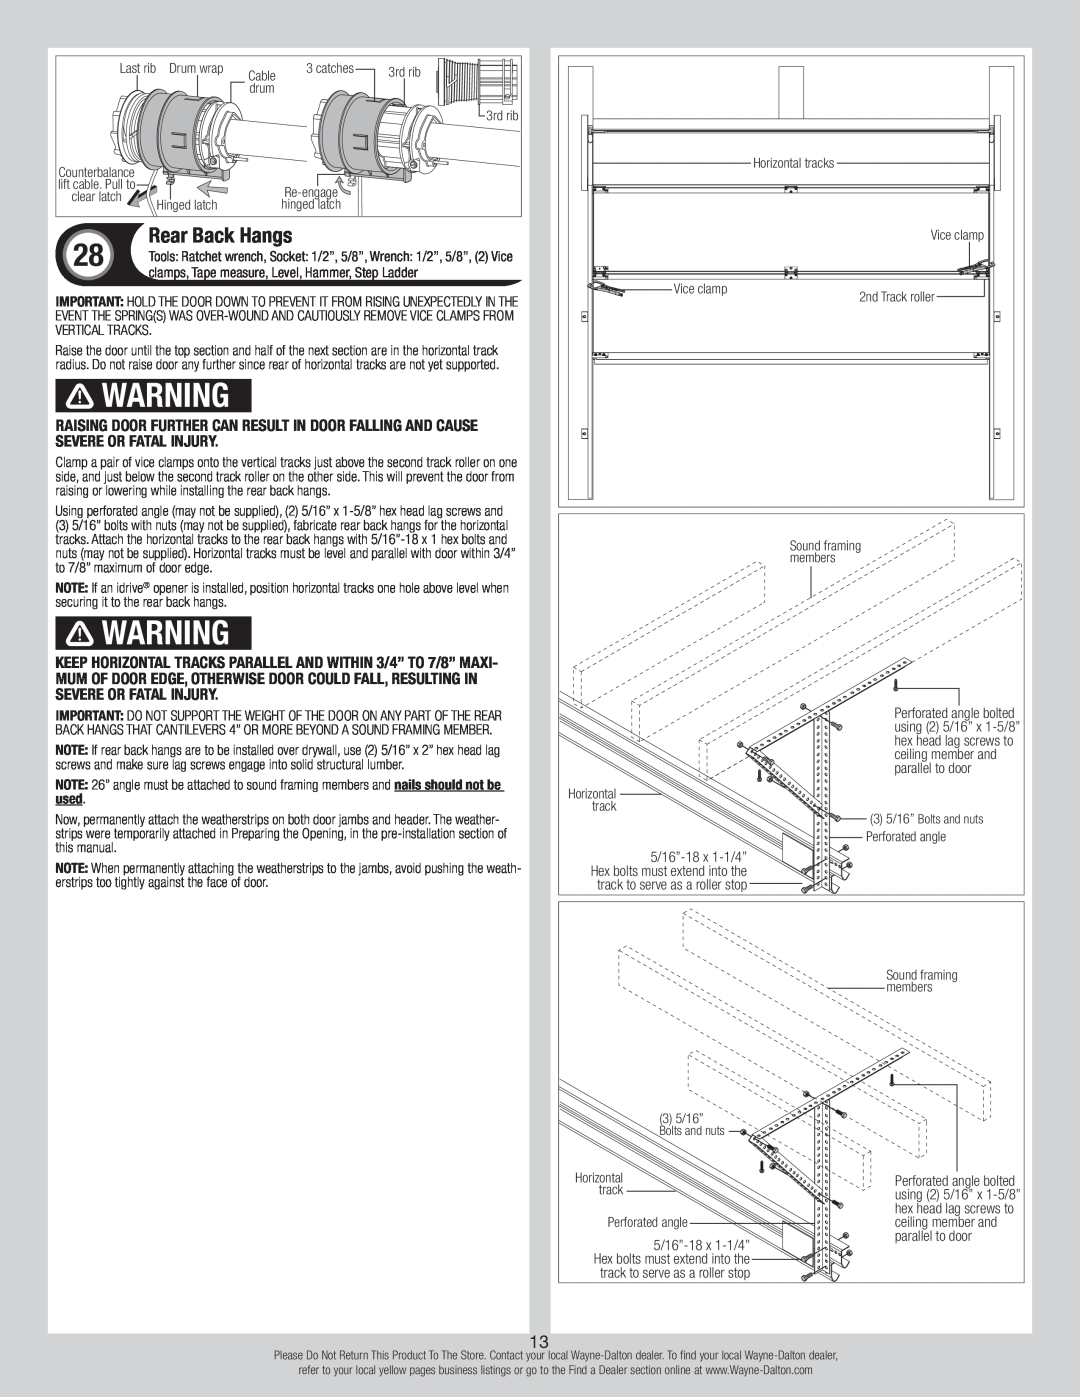 Wayne-Dalton 6100 installation instructions Rear Back Hangs 